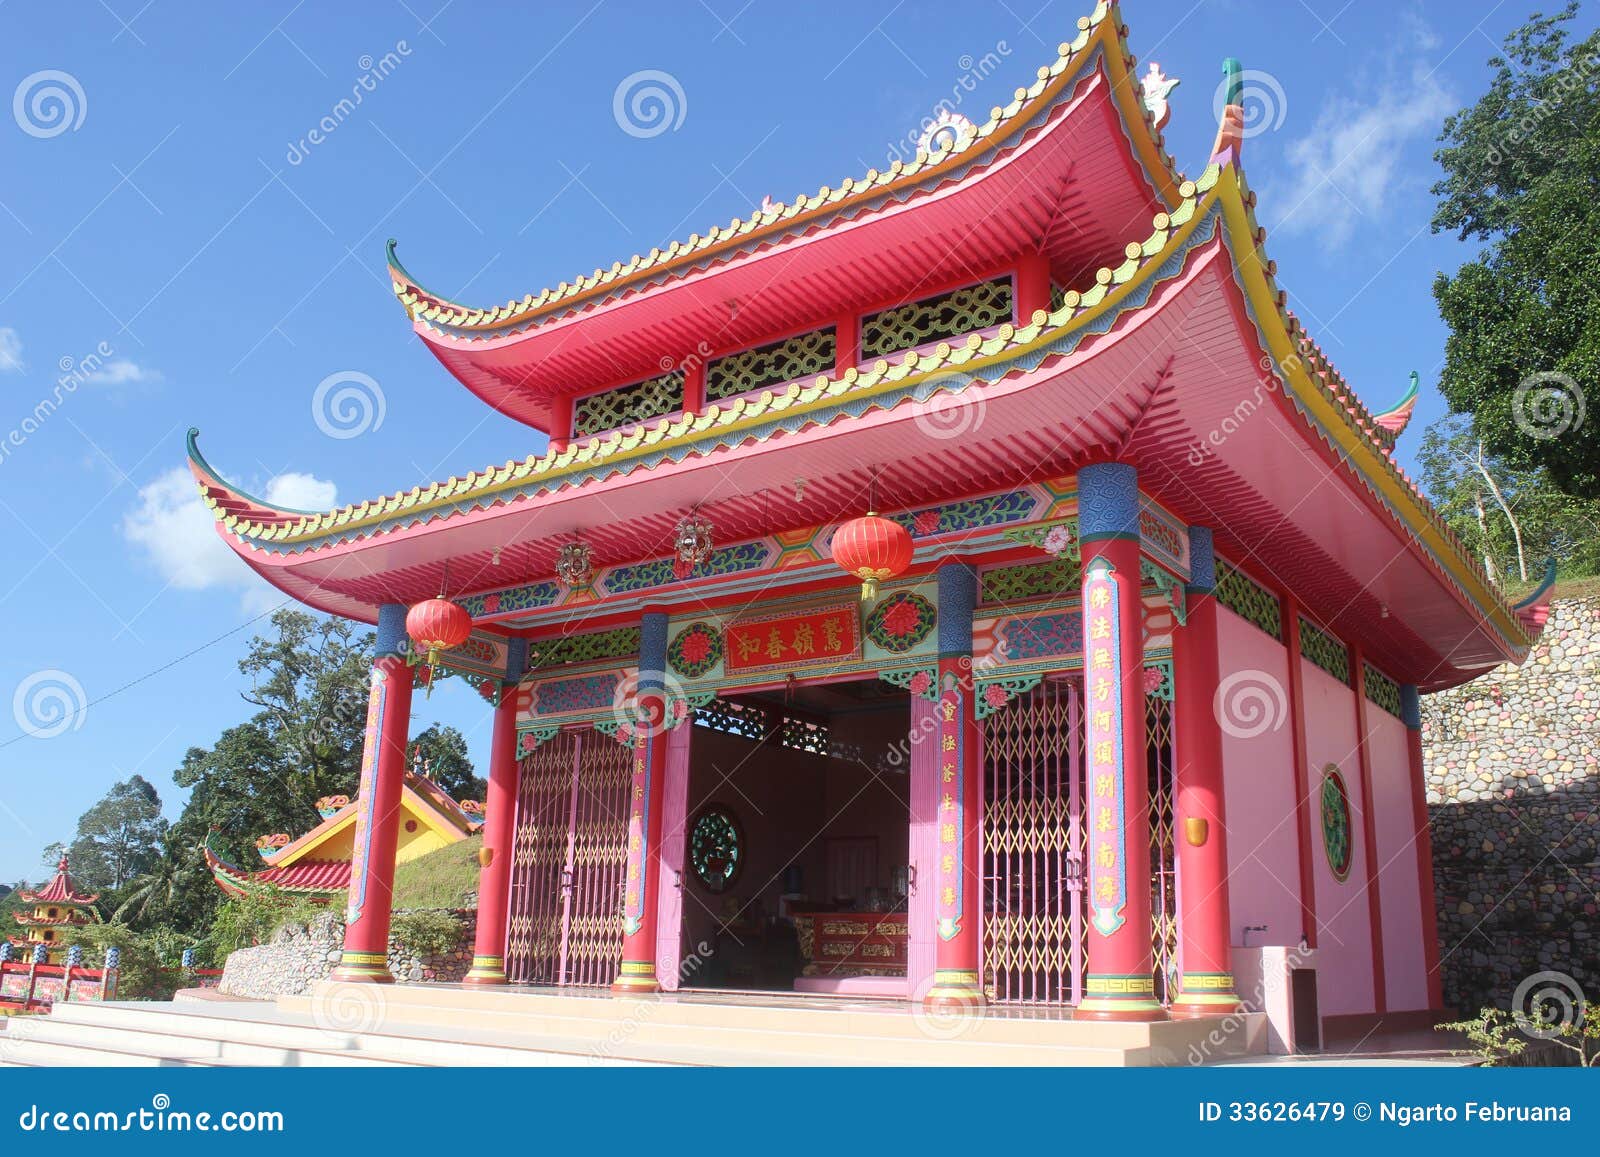 a confucianism temple